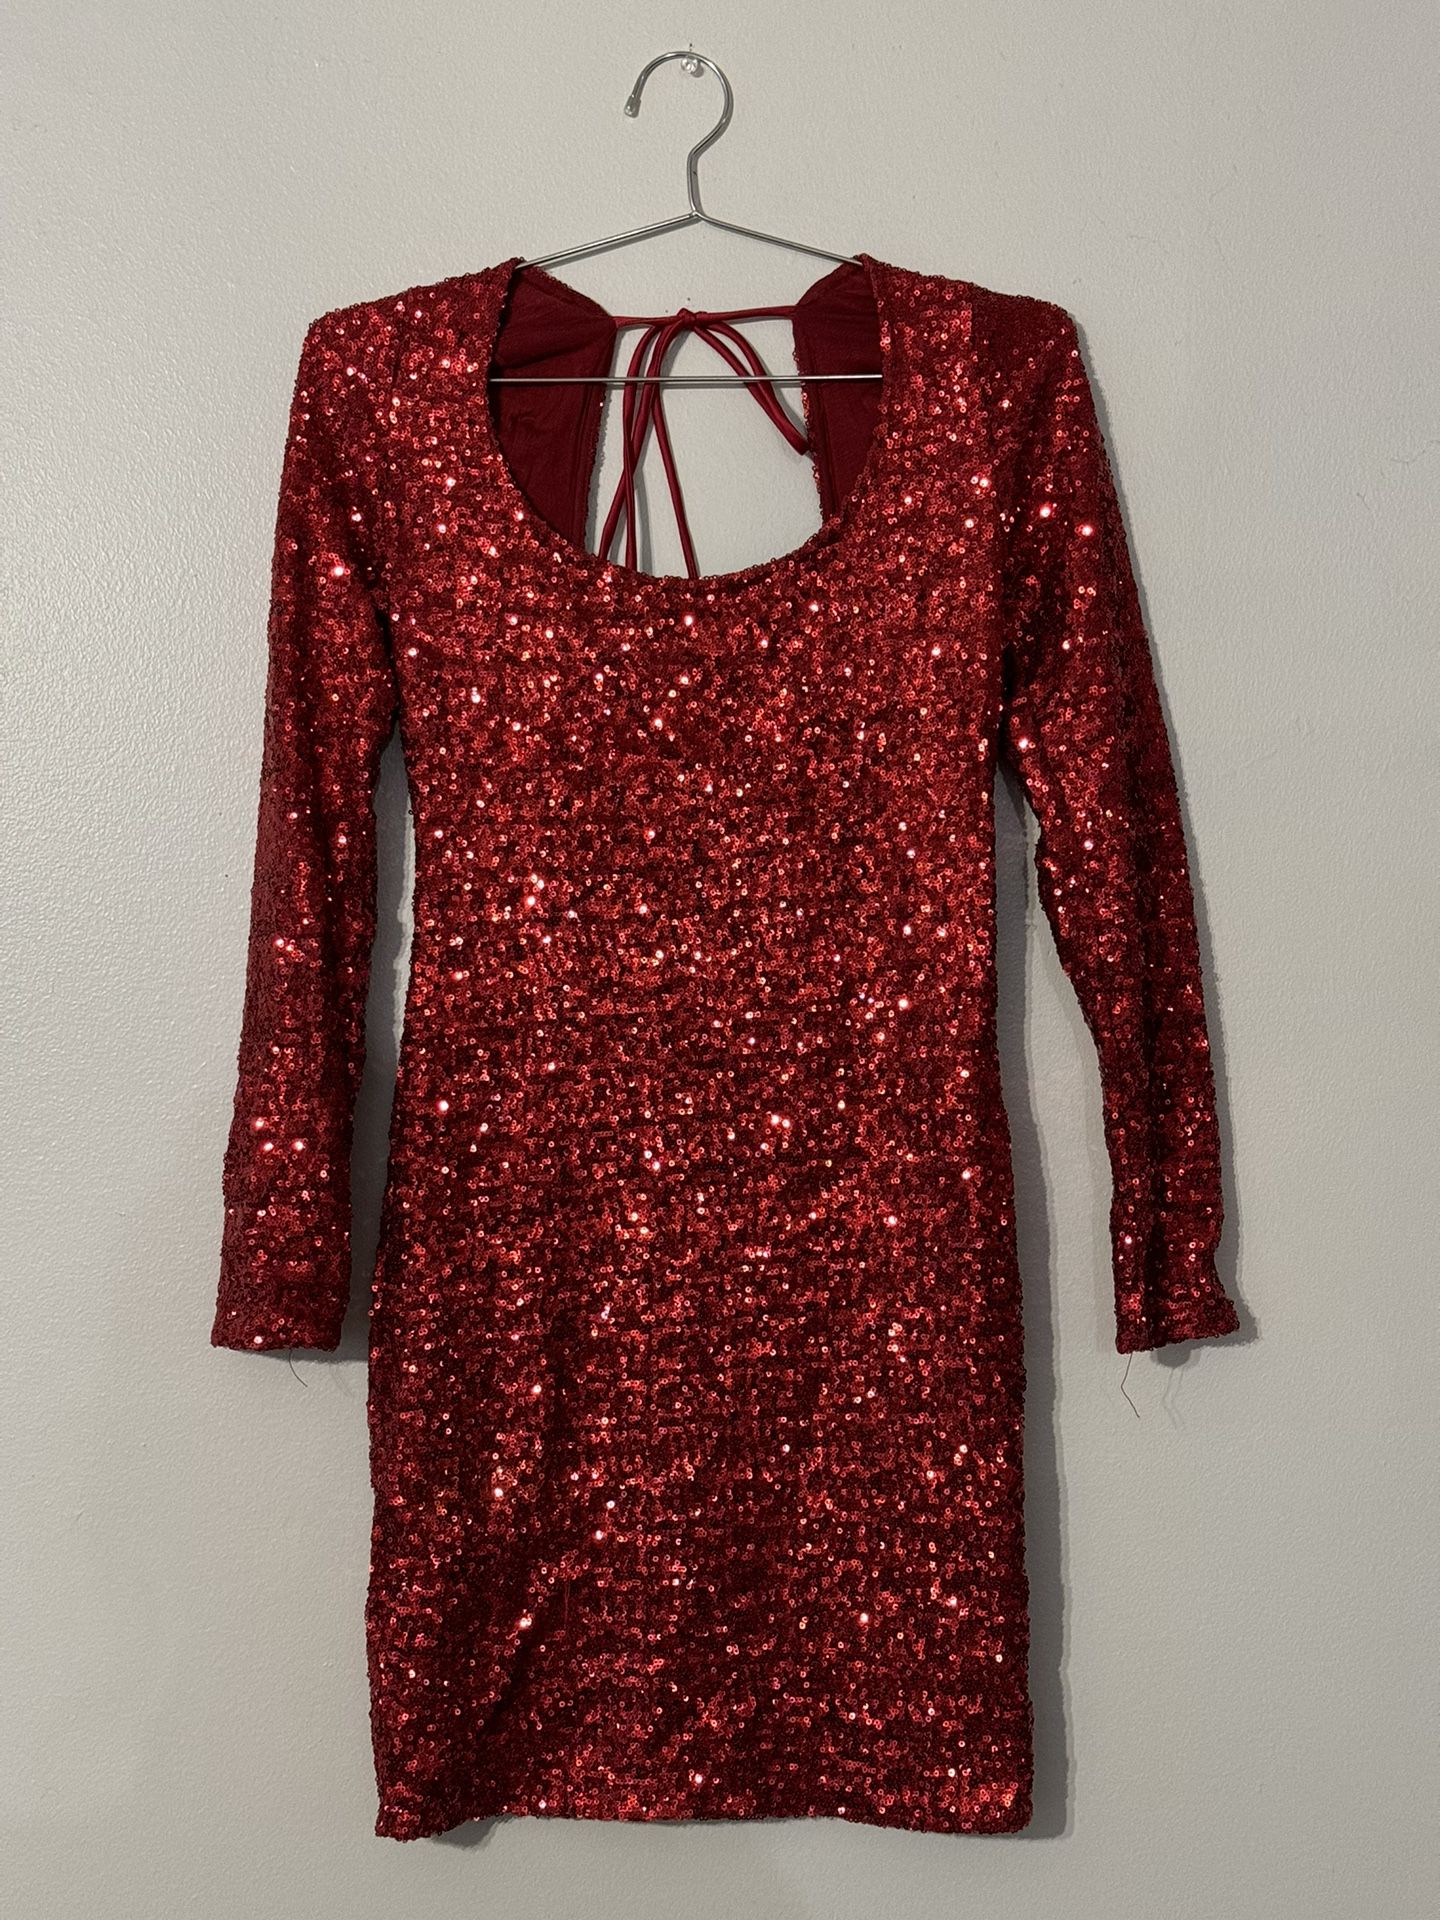 Arden B Red Sequin Women’s Dress, Small